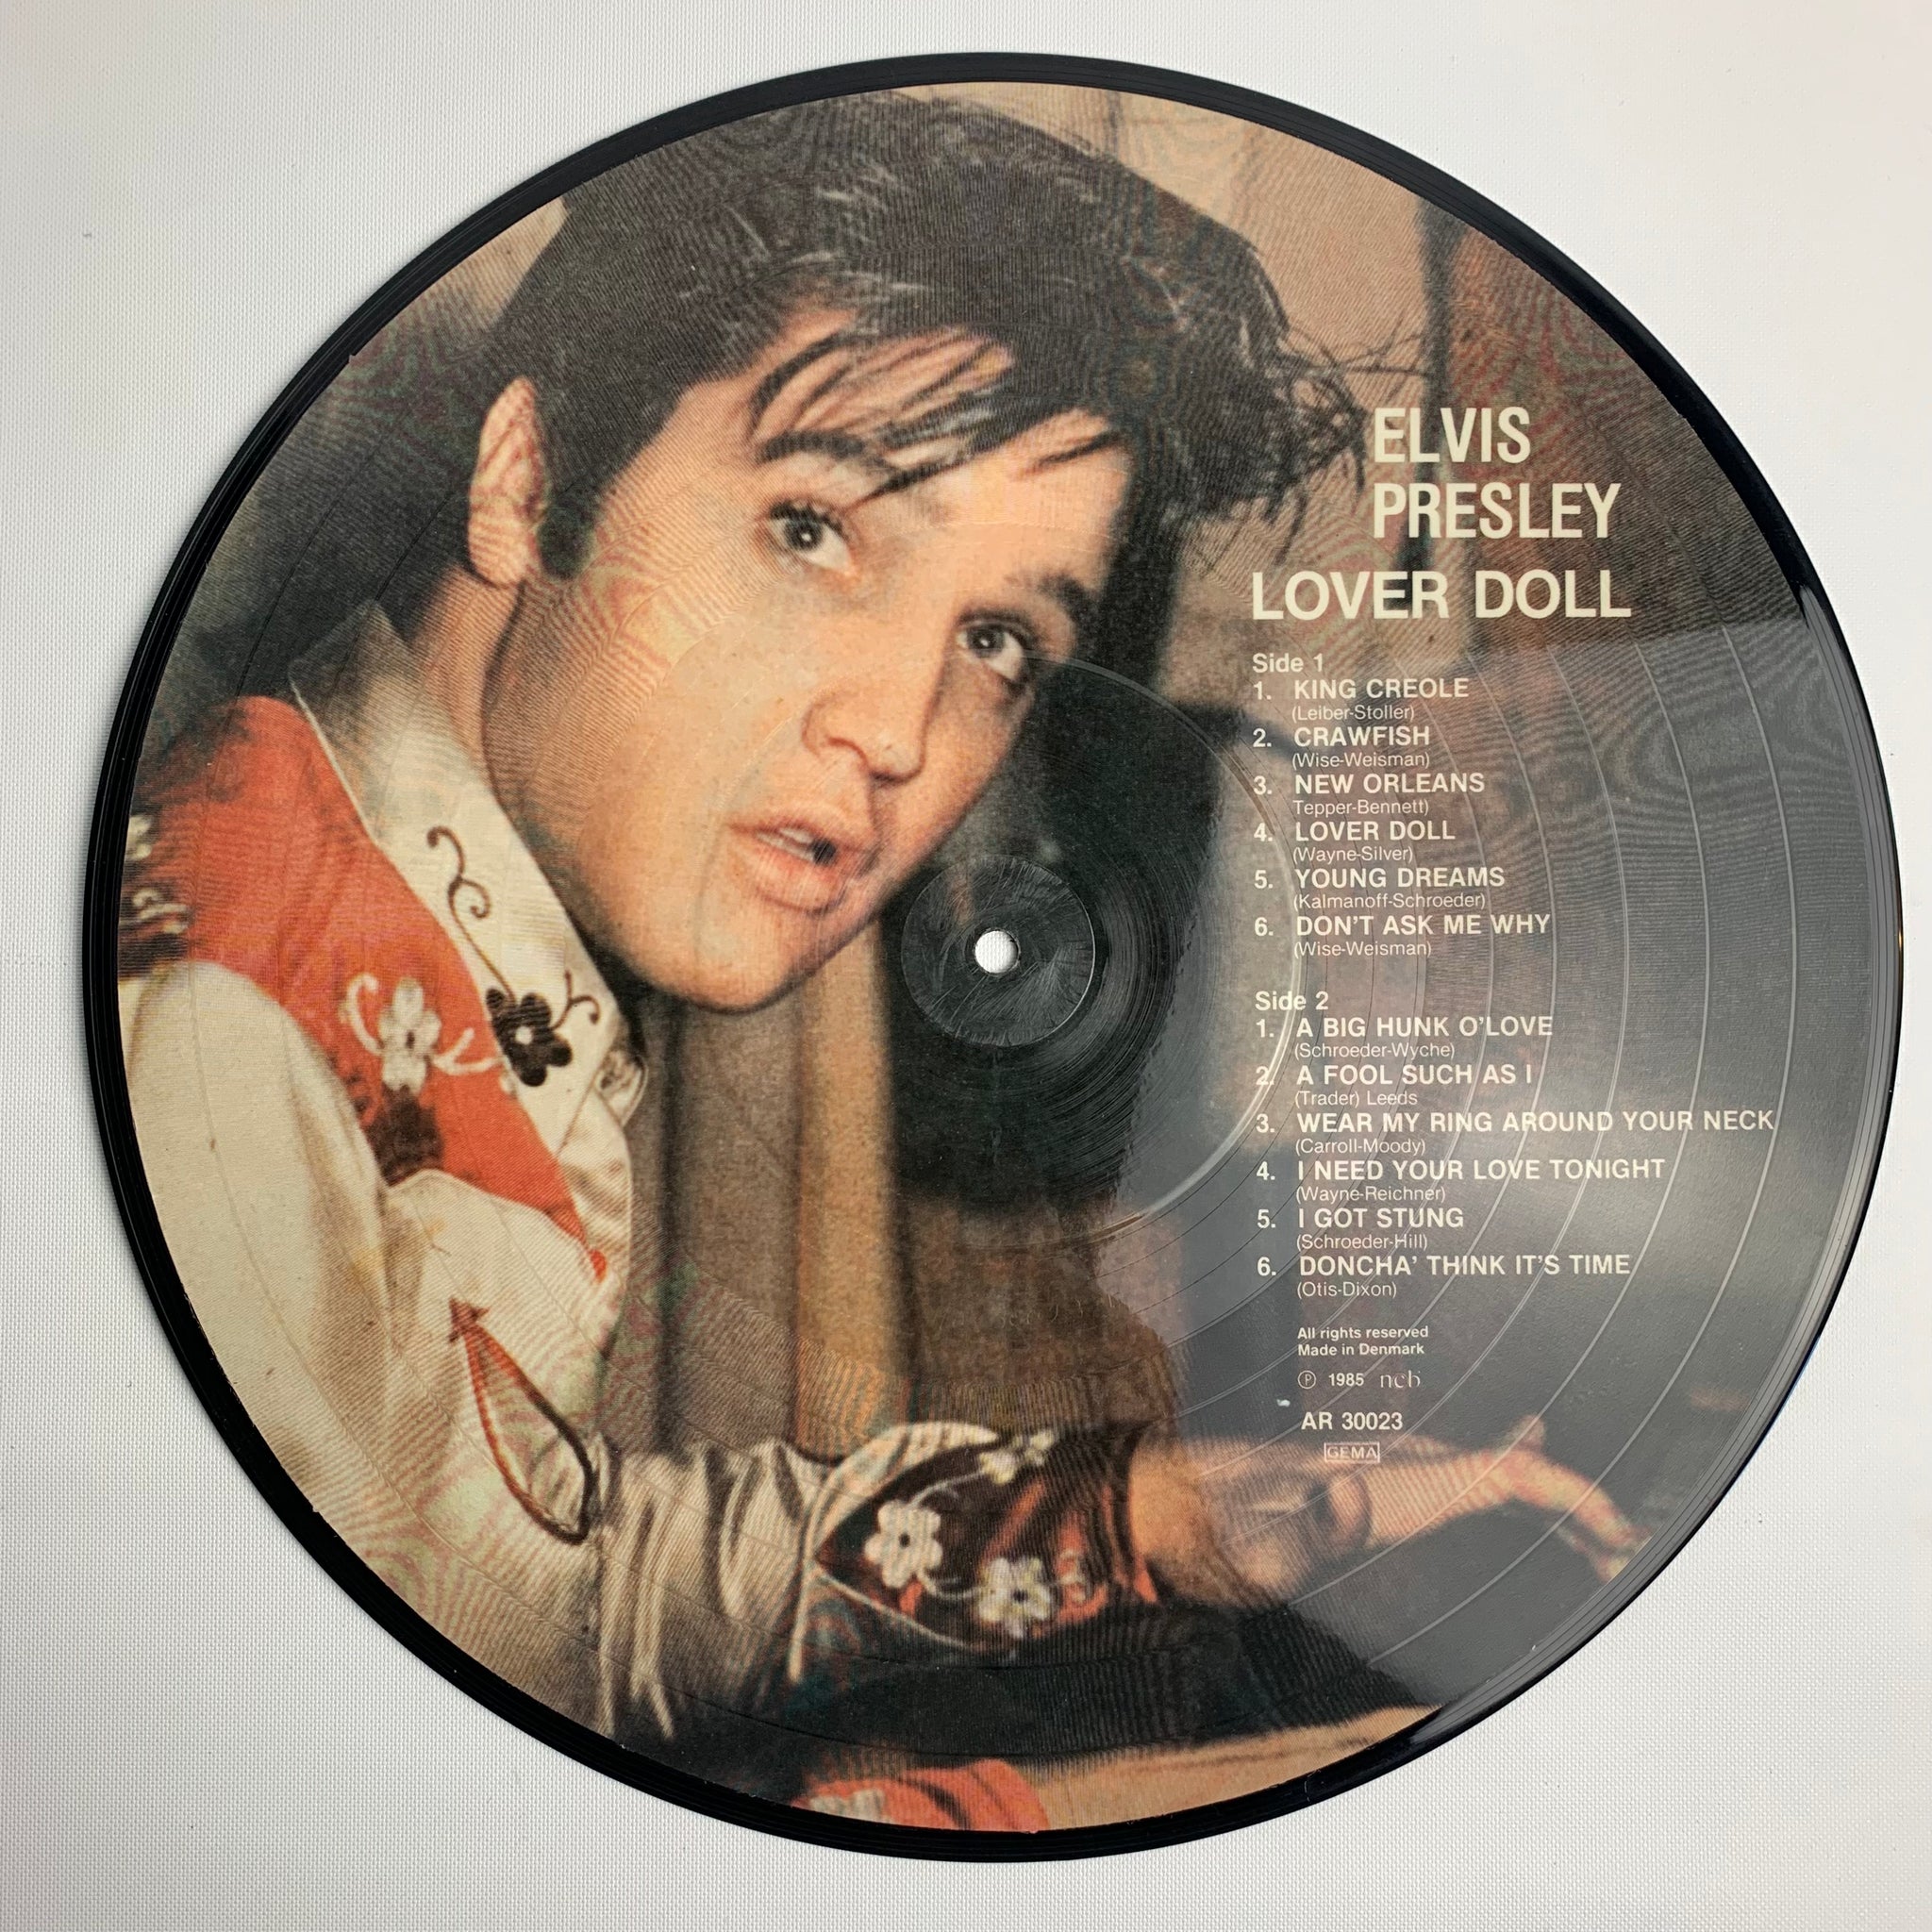 Picture LP Elvis Lover Doll